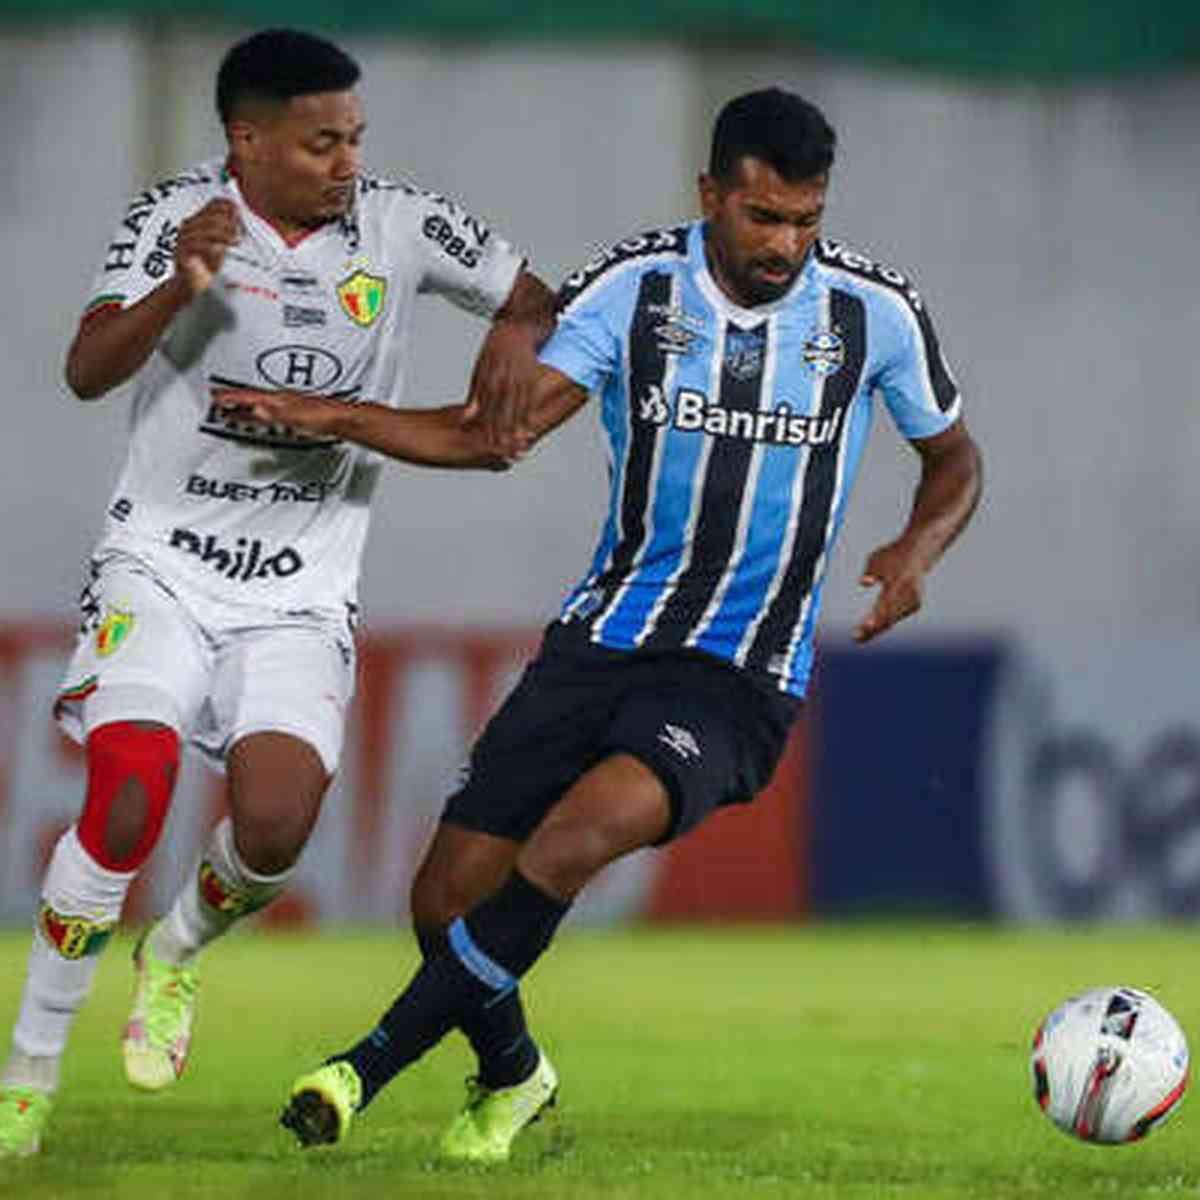 Ceará SC vs Tombense: A Glimpse into the Match